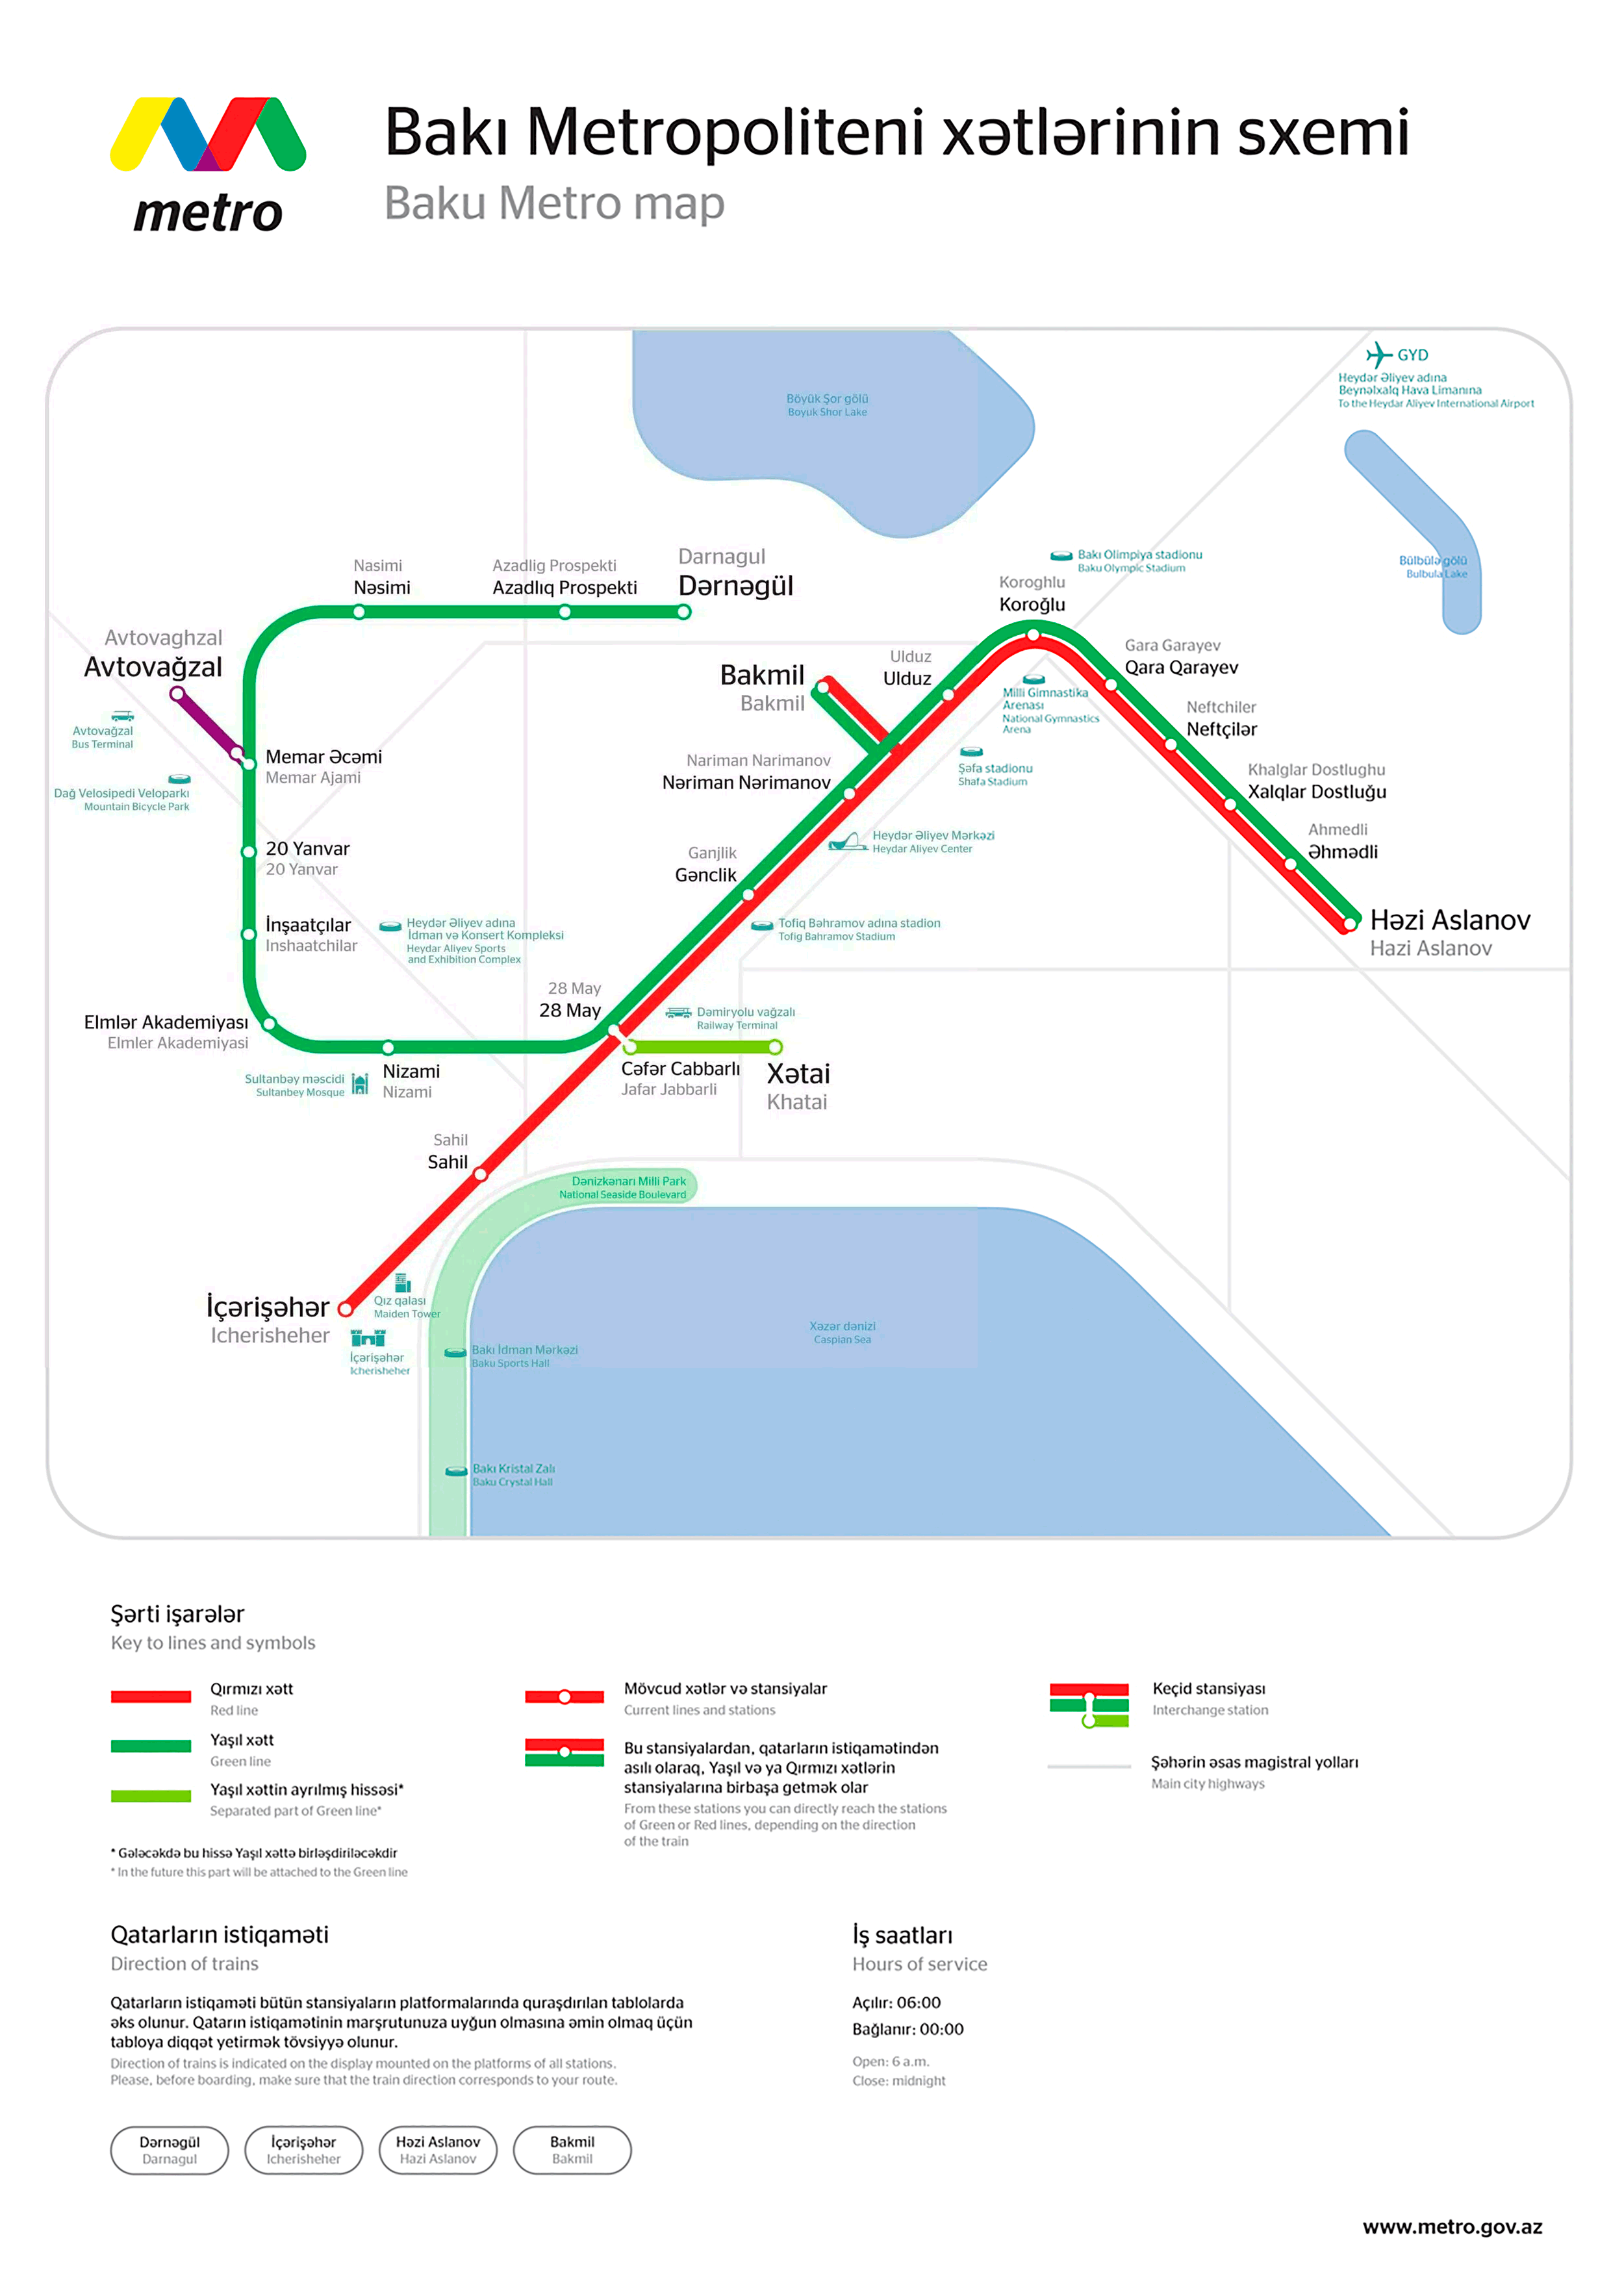 Mappa della metropolitana di Baku.